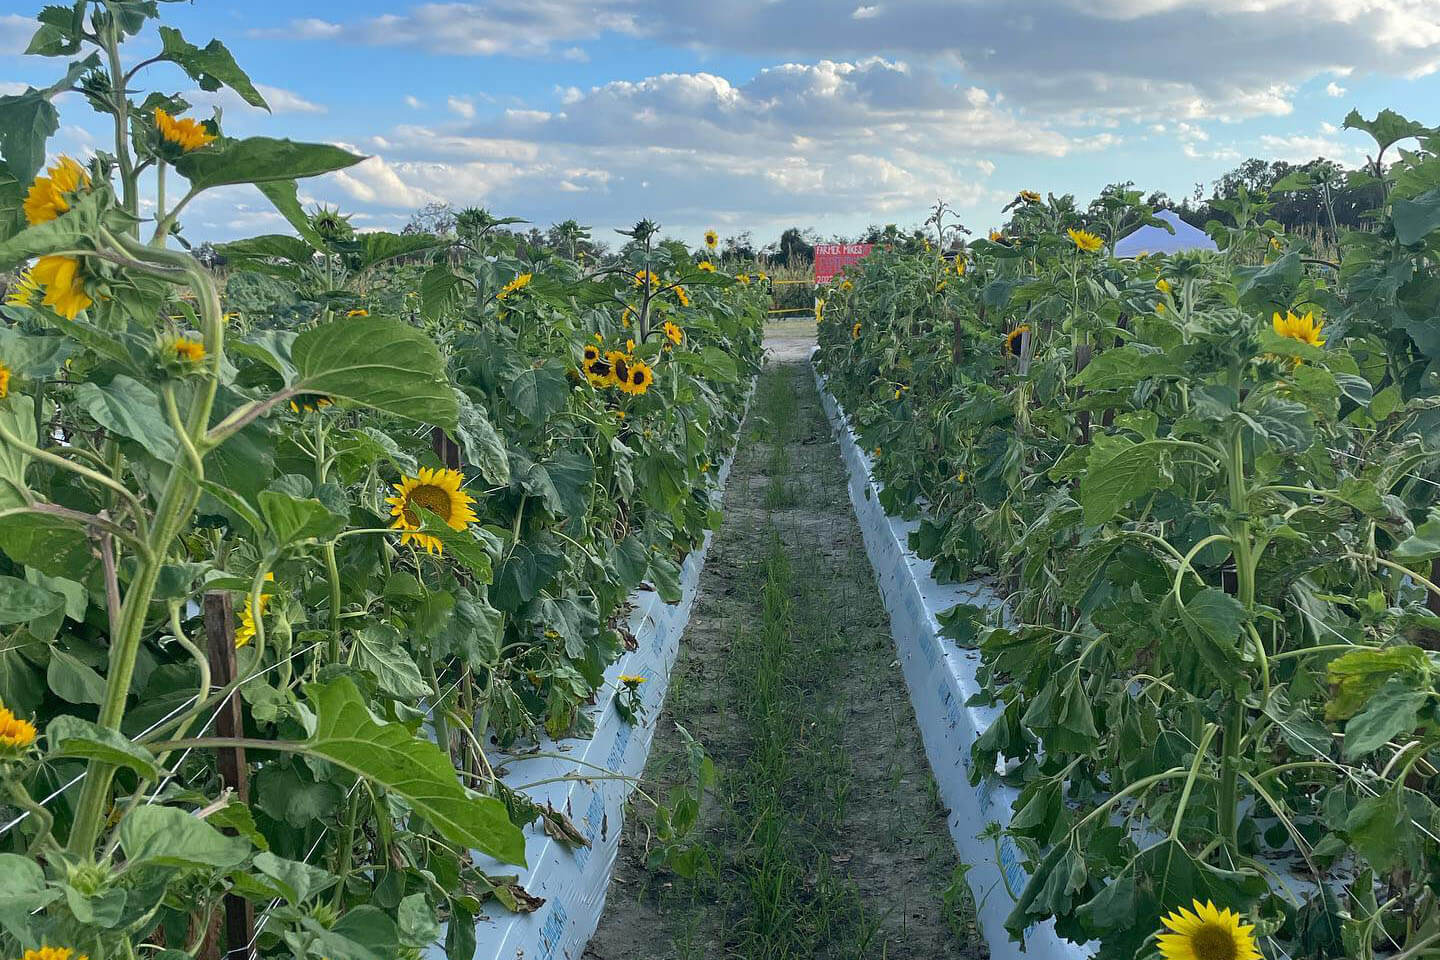 Farmer Mikes U Pick Sunflower Field